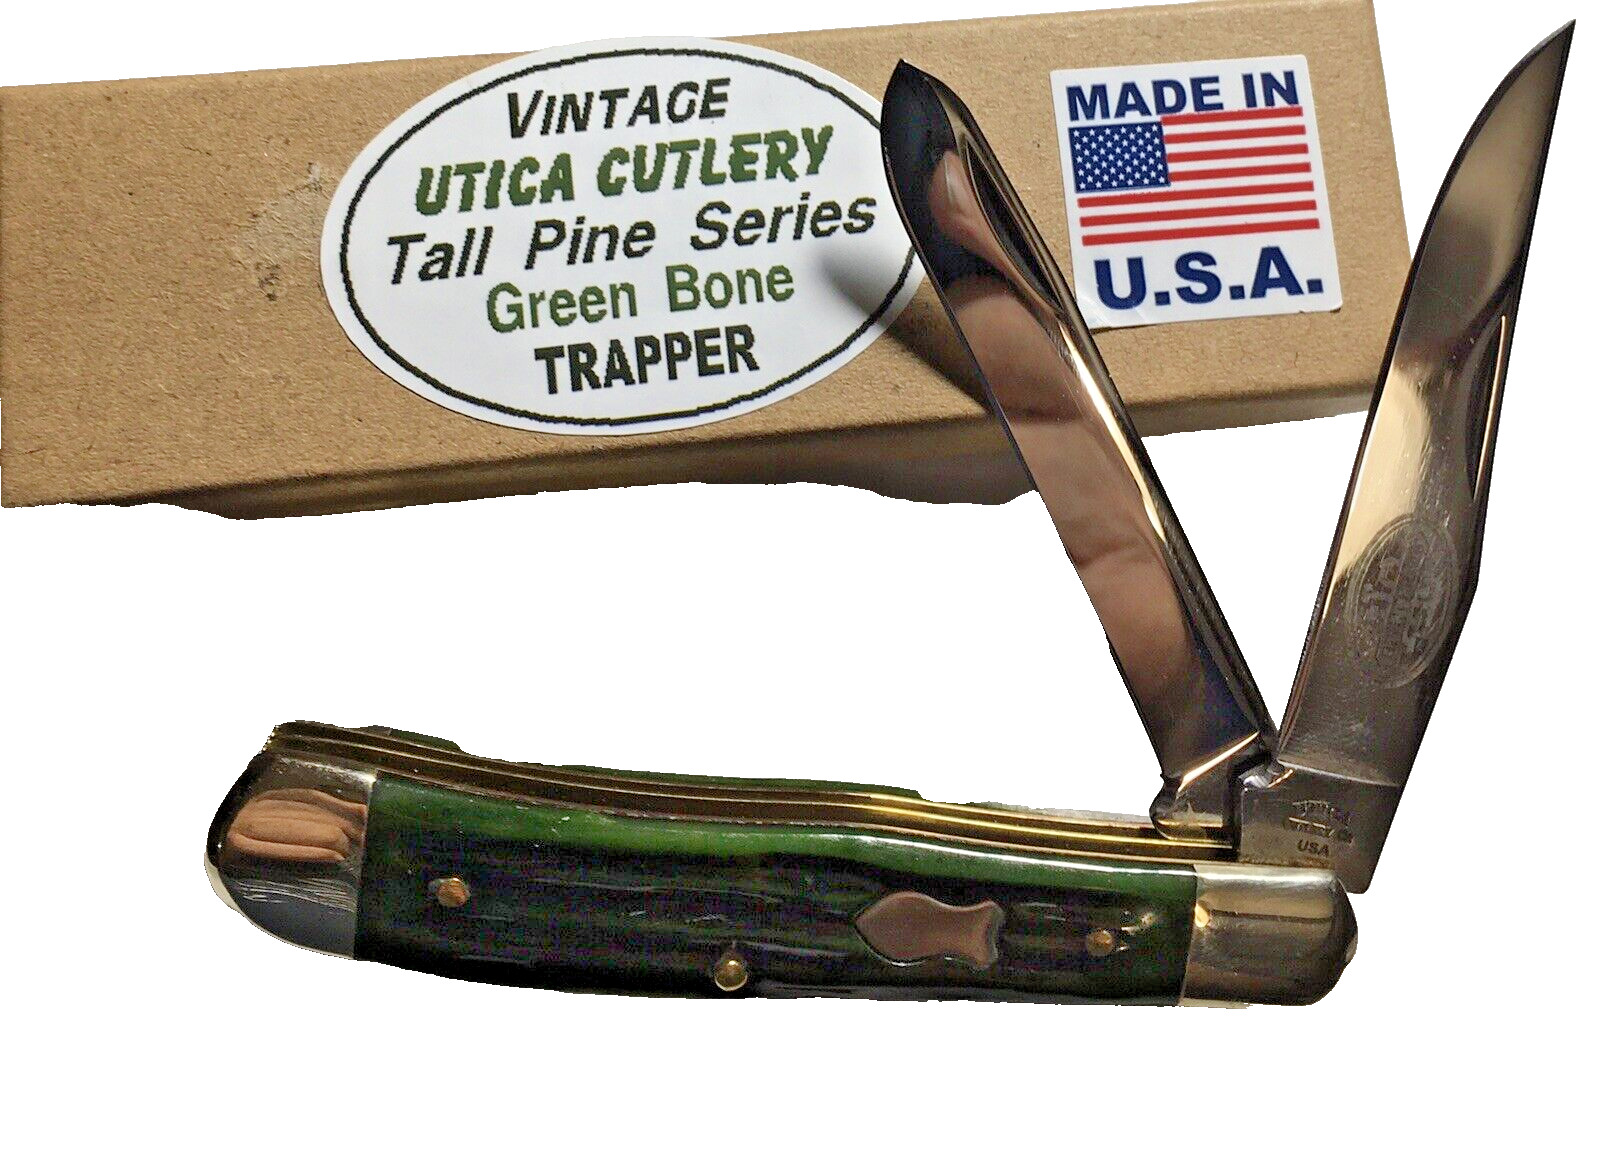 Vintage Utica Cutlery Warranted Green Bone Trapper Pocket Knife MADE IN U.S.A.